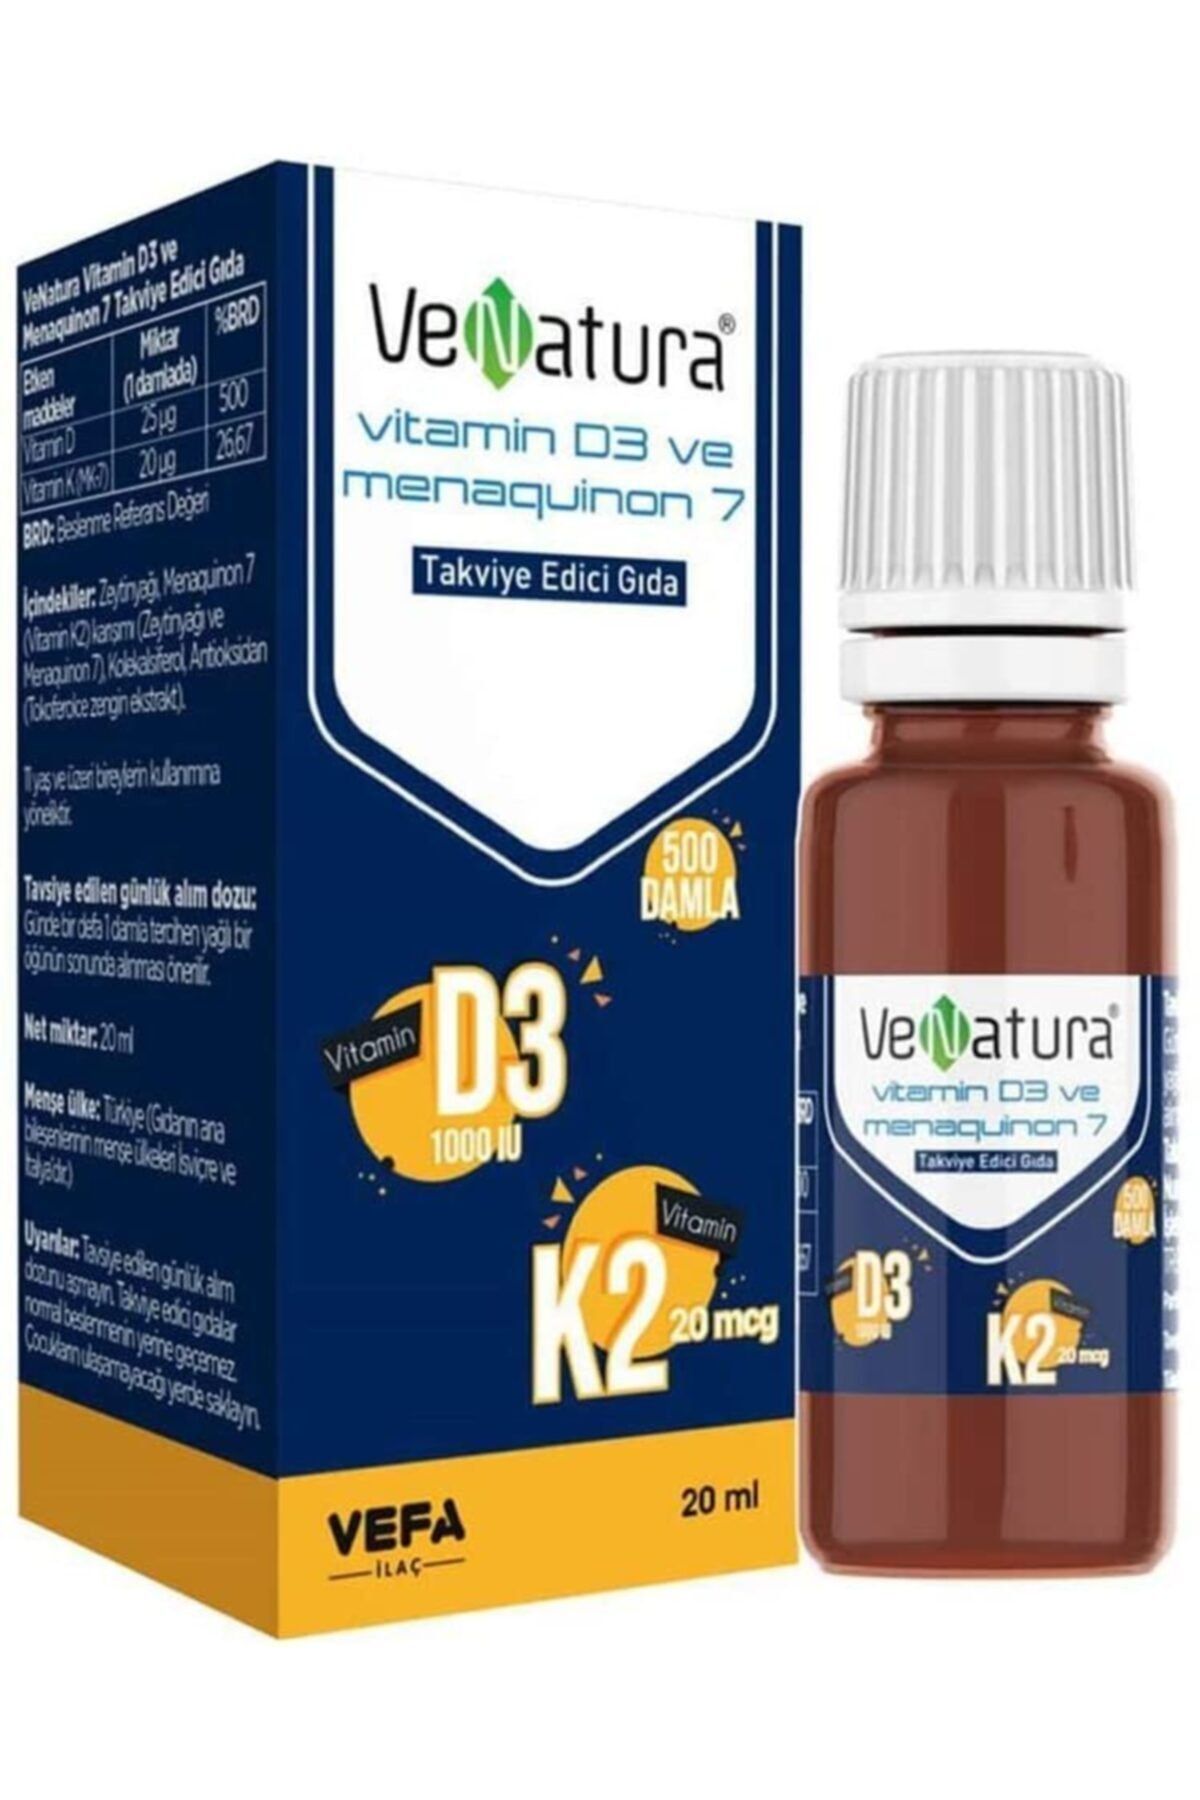 Venatura Vitamin D3 Ve Menaquinon 7 Takviye Edici Gıda